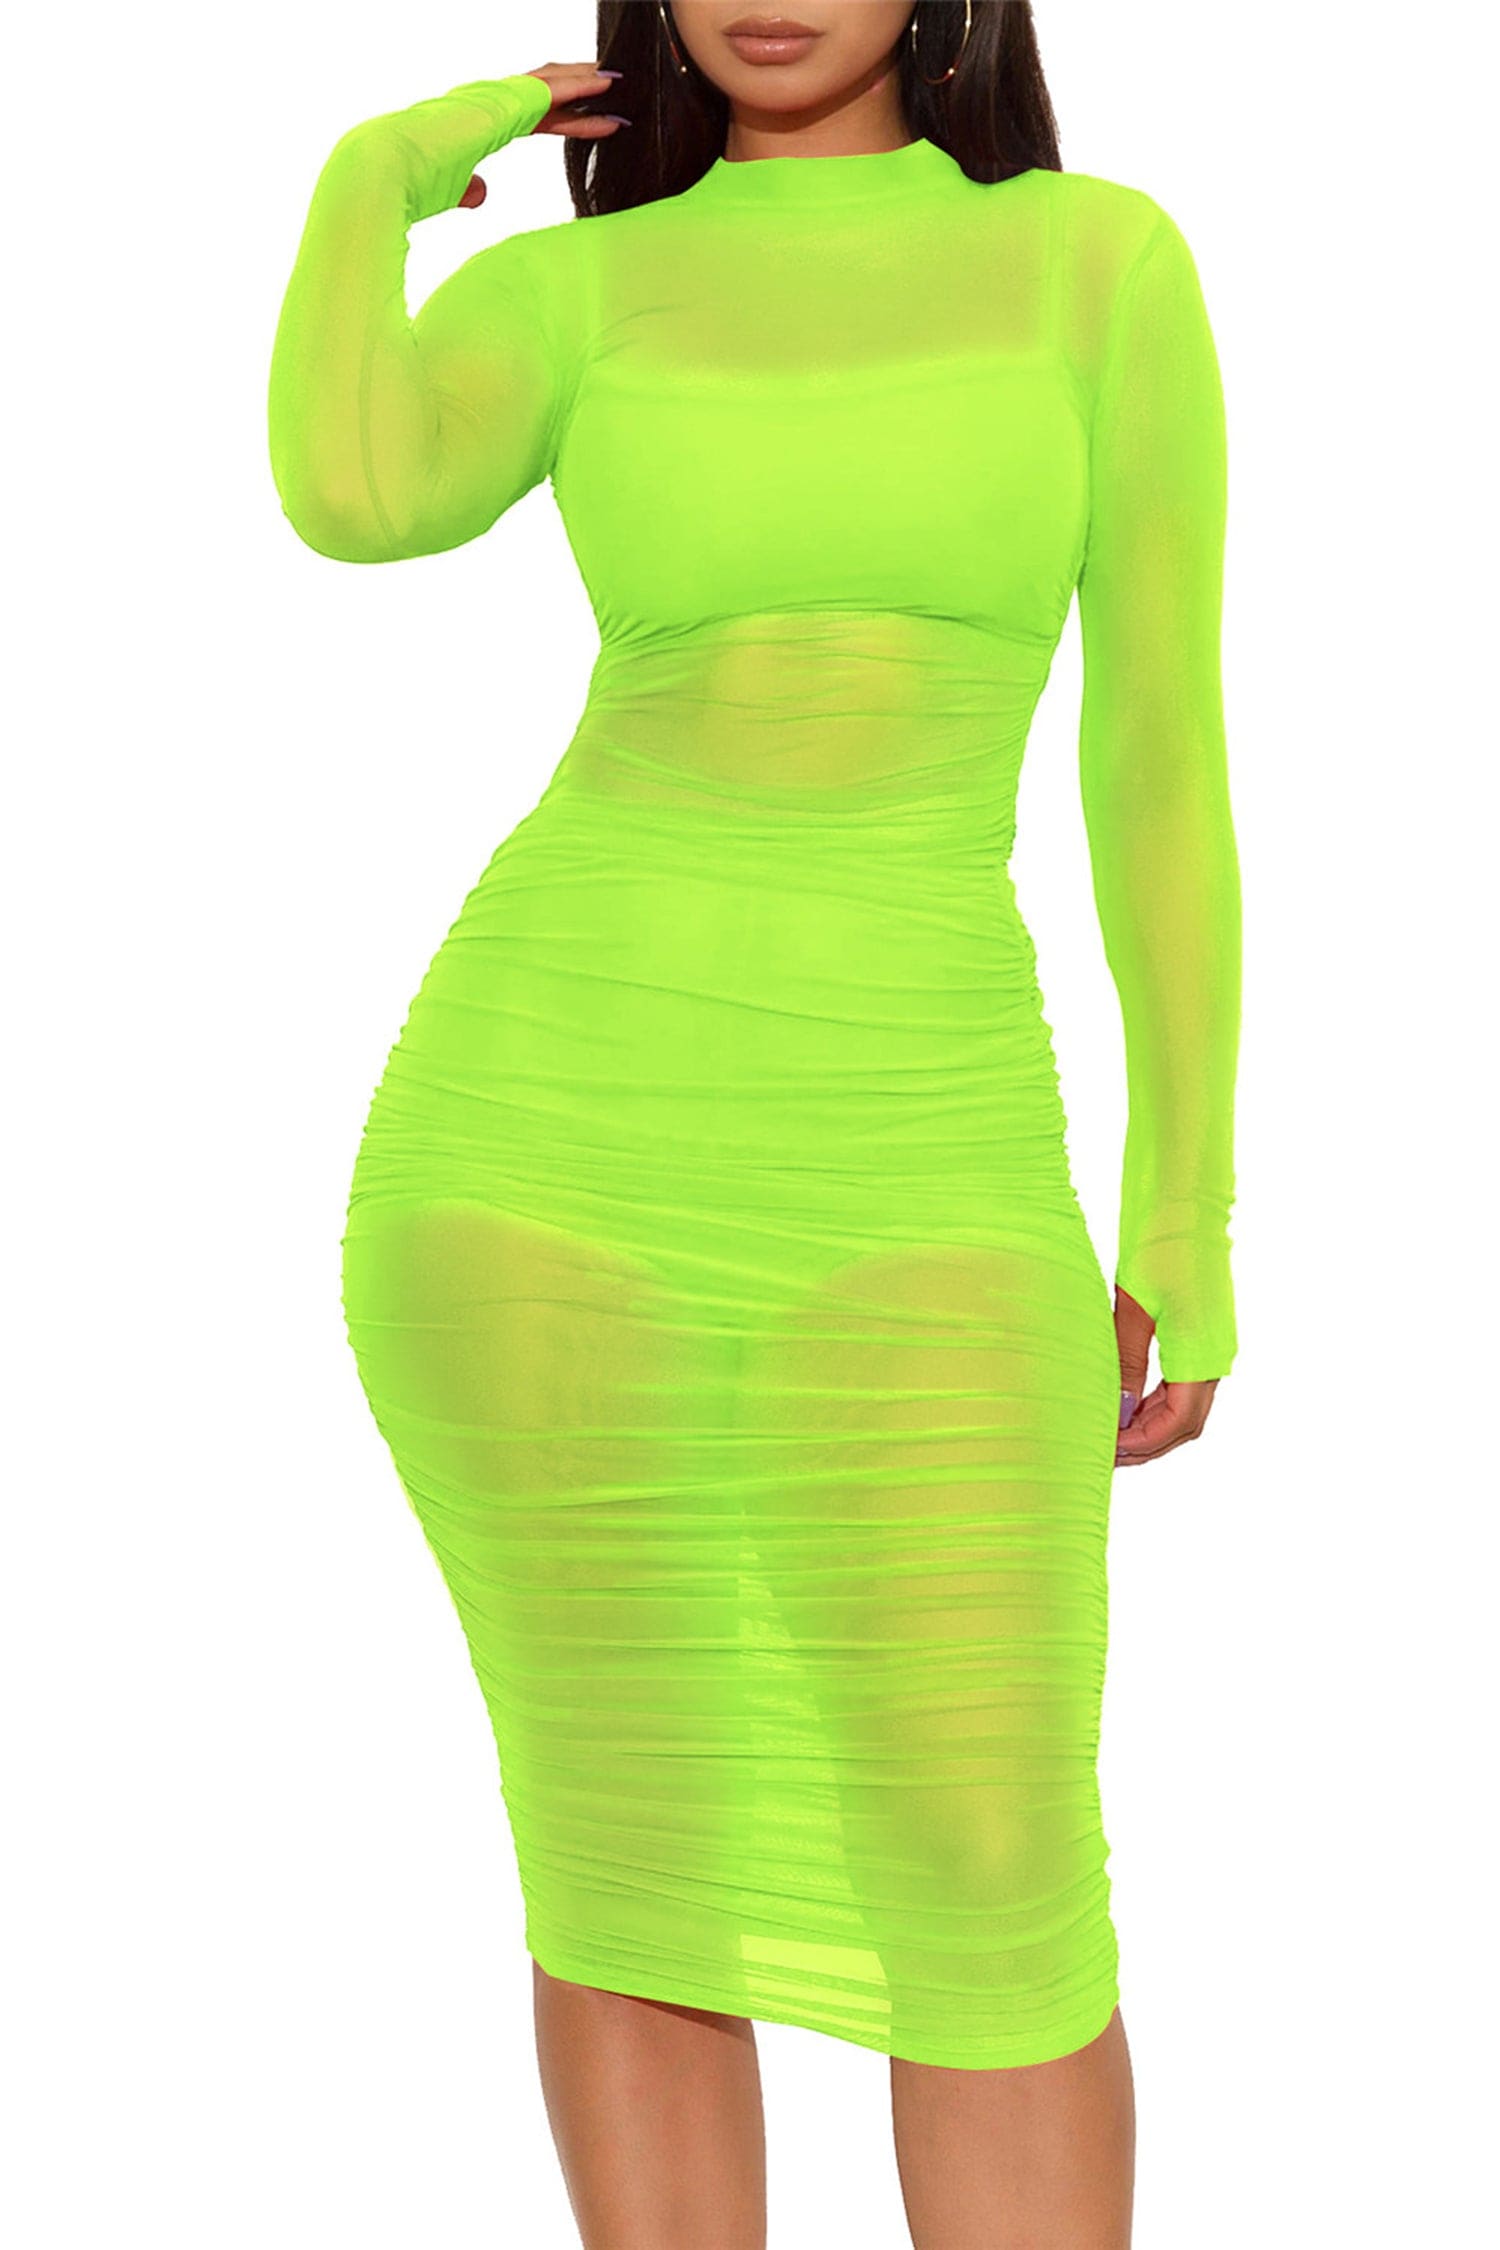 Neon Lime Green Mesh See Trough Dress Dresses